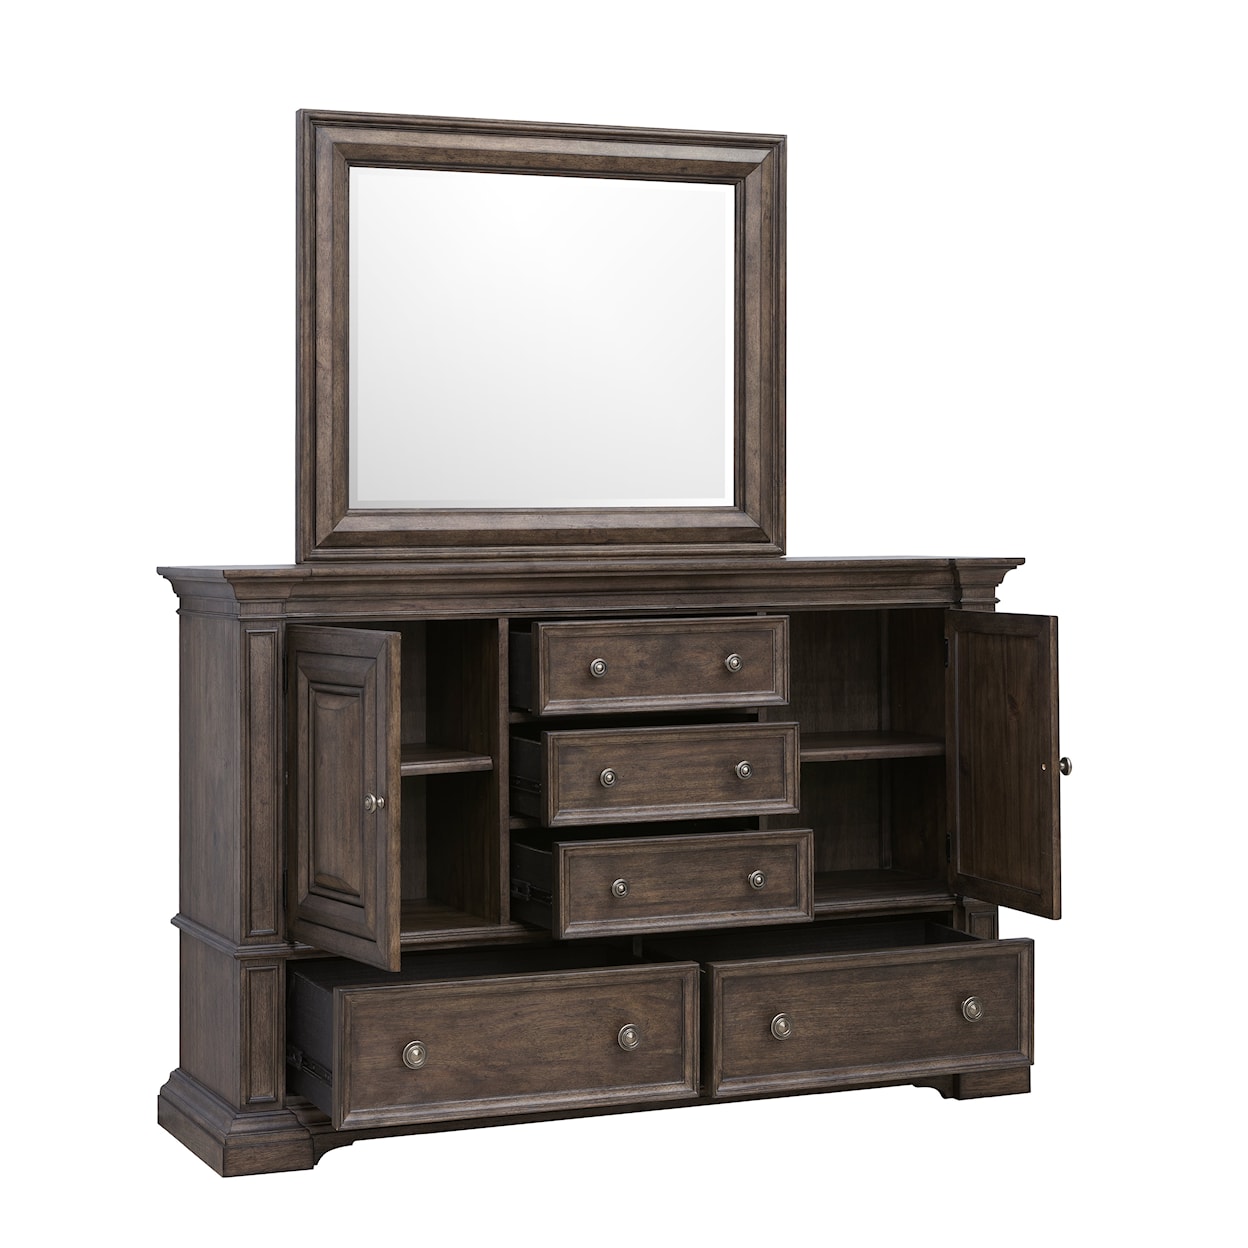 Pulaski Furniture Woodbury Dresser and Mirror